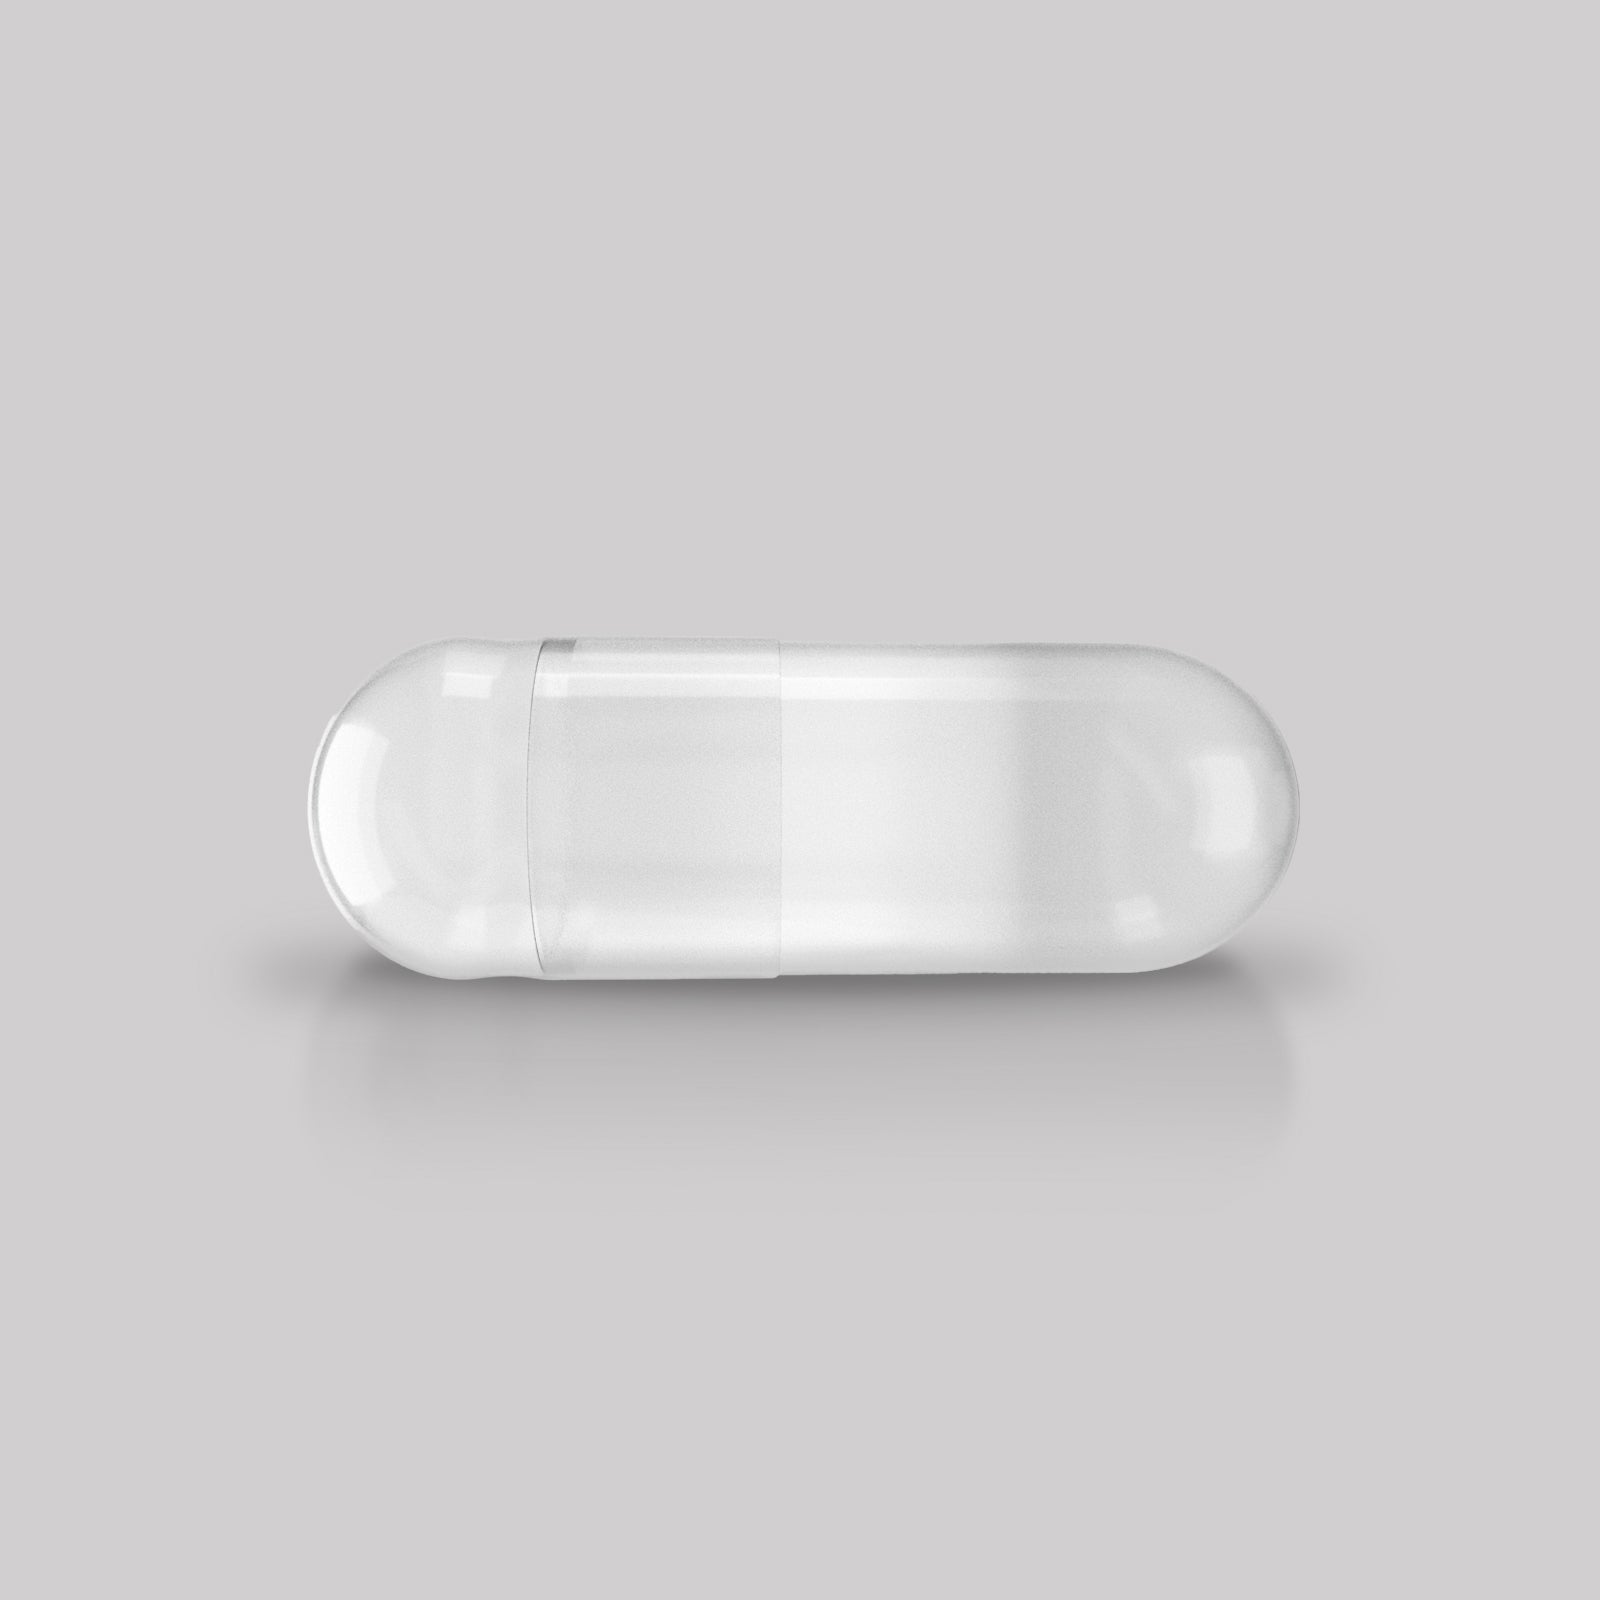 Capsule Depot - Size 0 Empty Gelatin Capsules - Empty Pill Capsules - Bulk